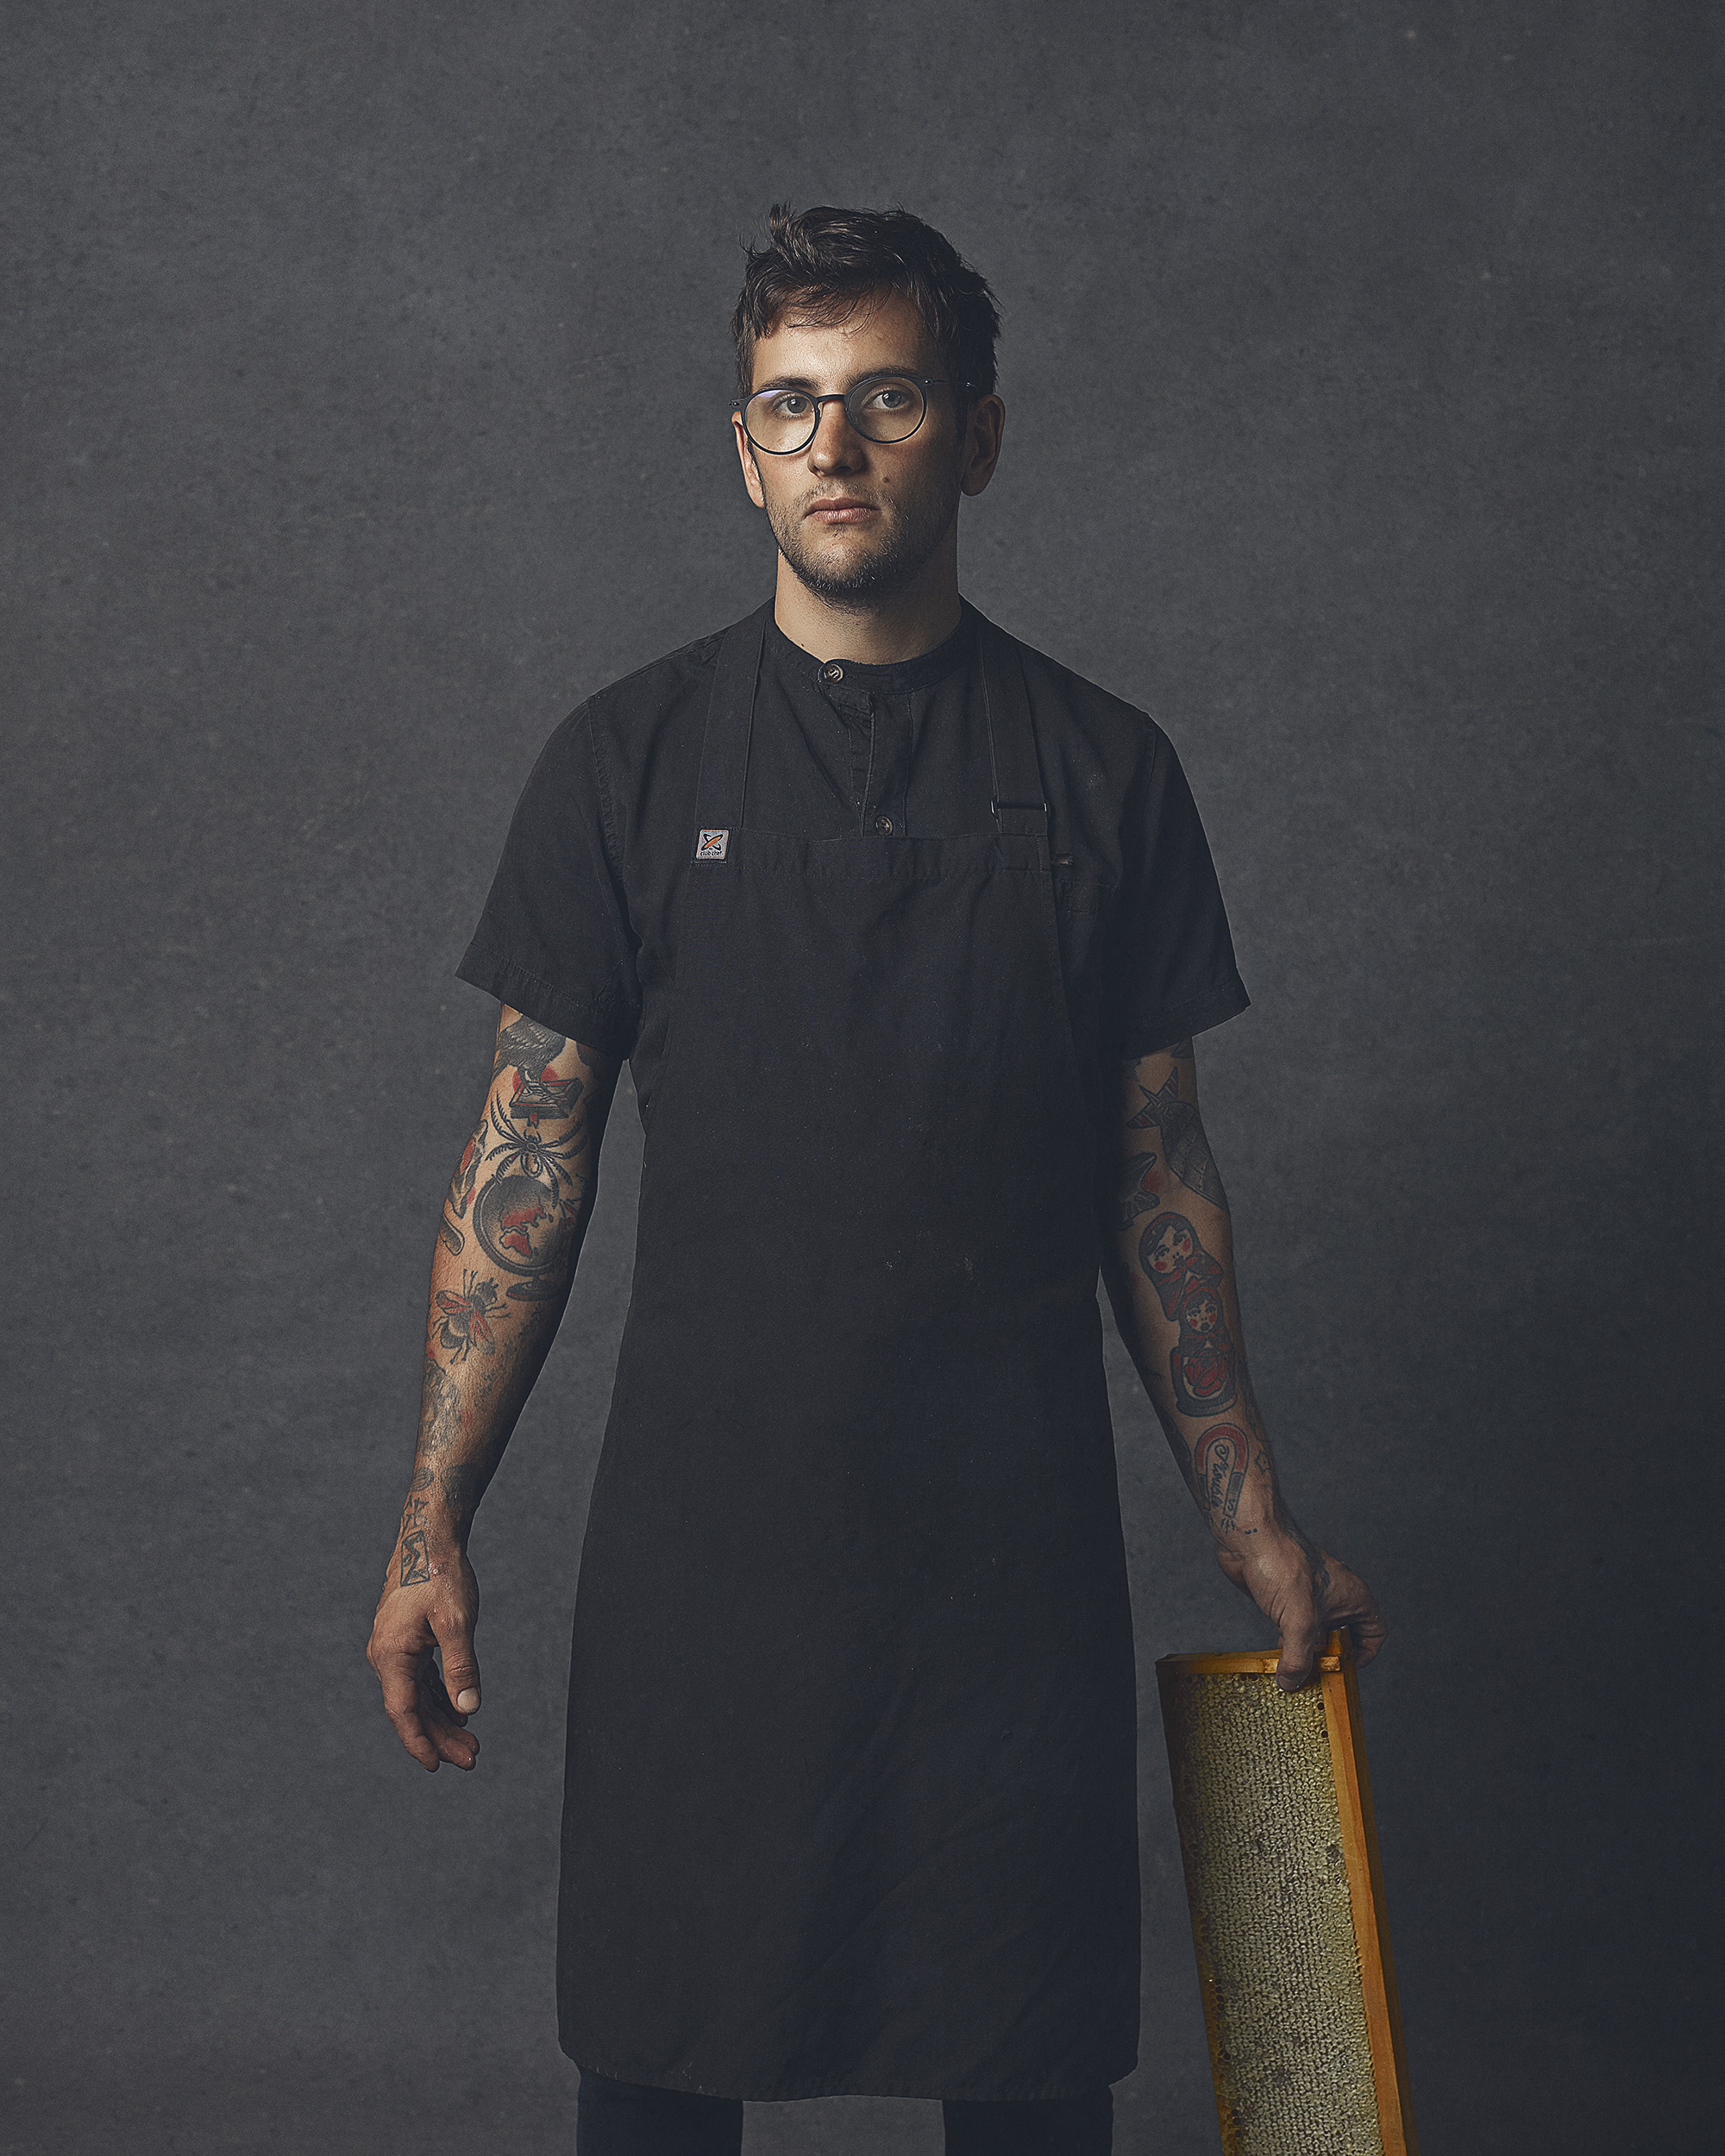 melbourne-chefs-thom-rigney-professional-photographer-advertising-portraits-food-001